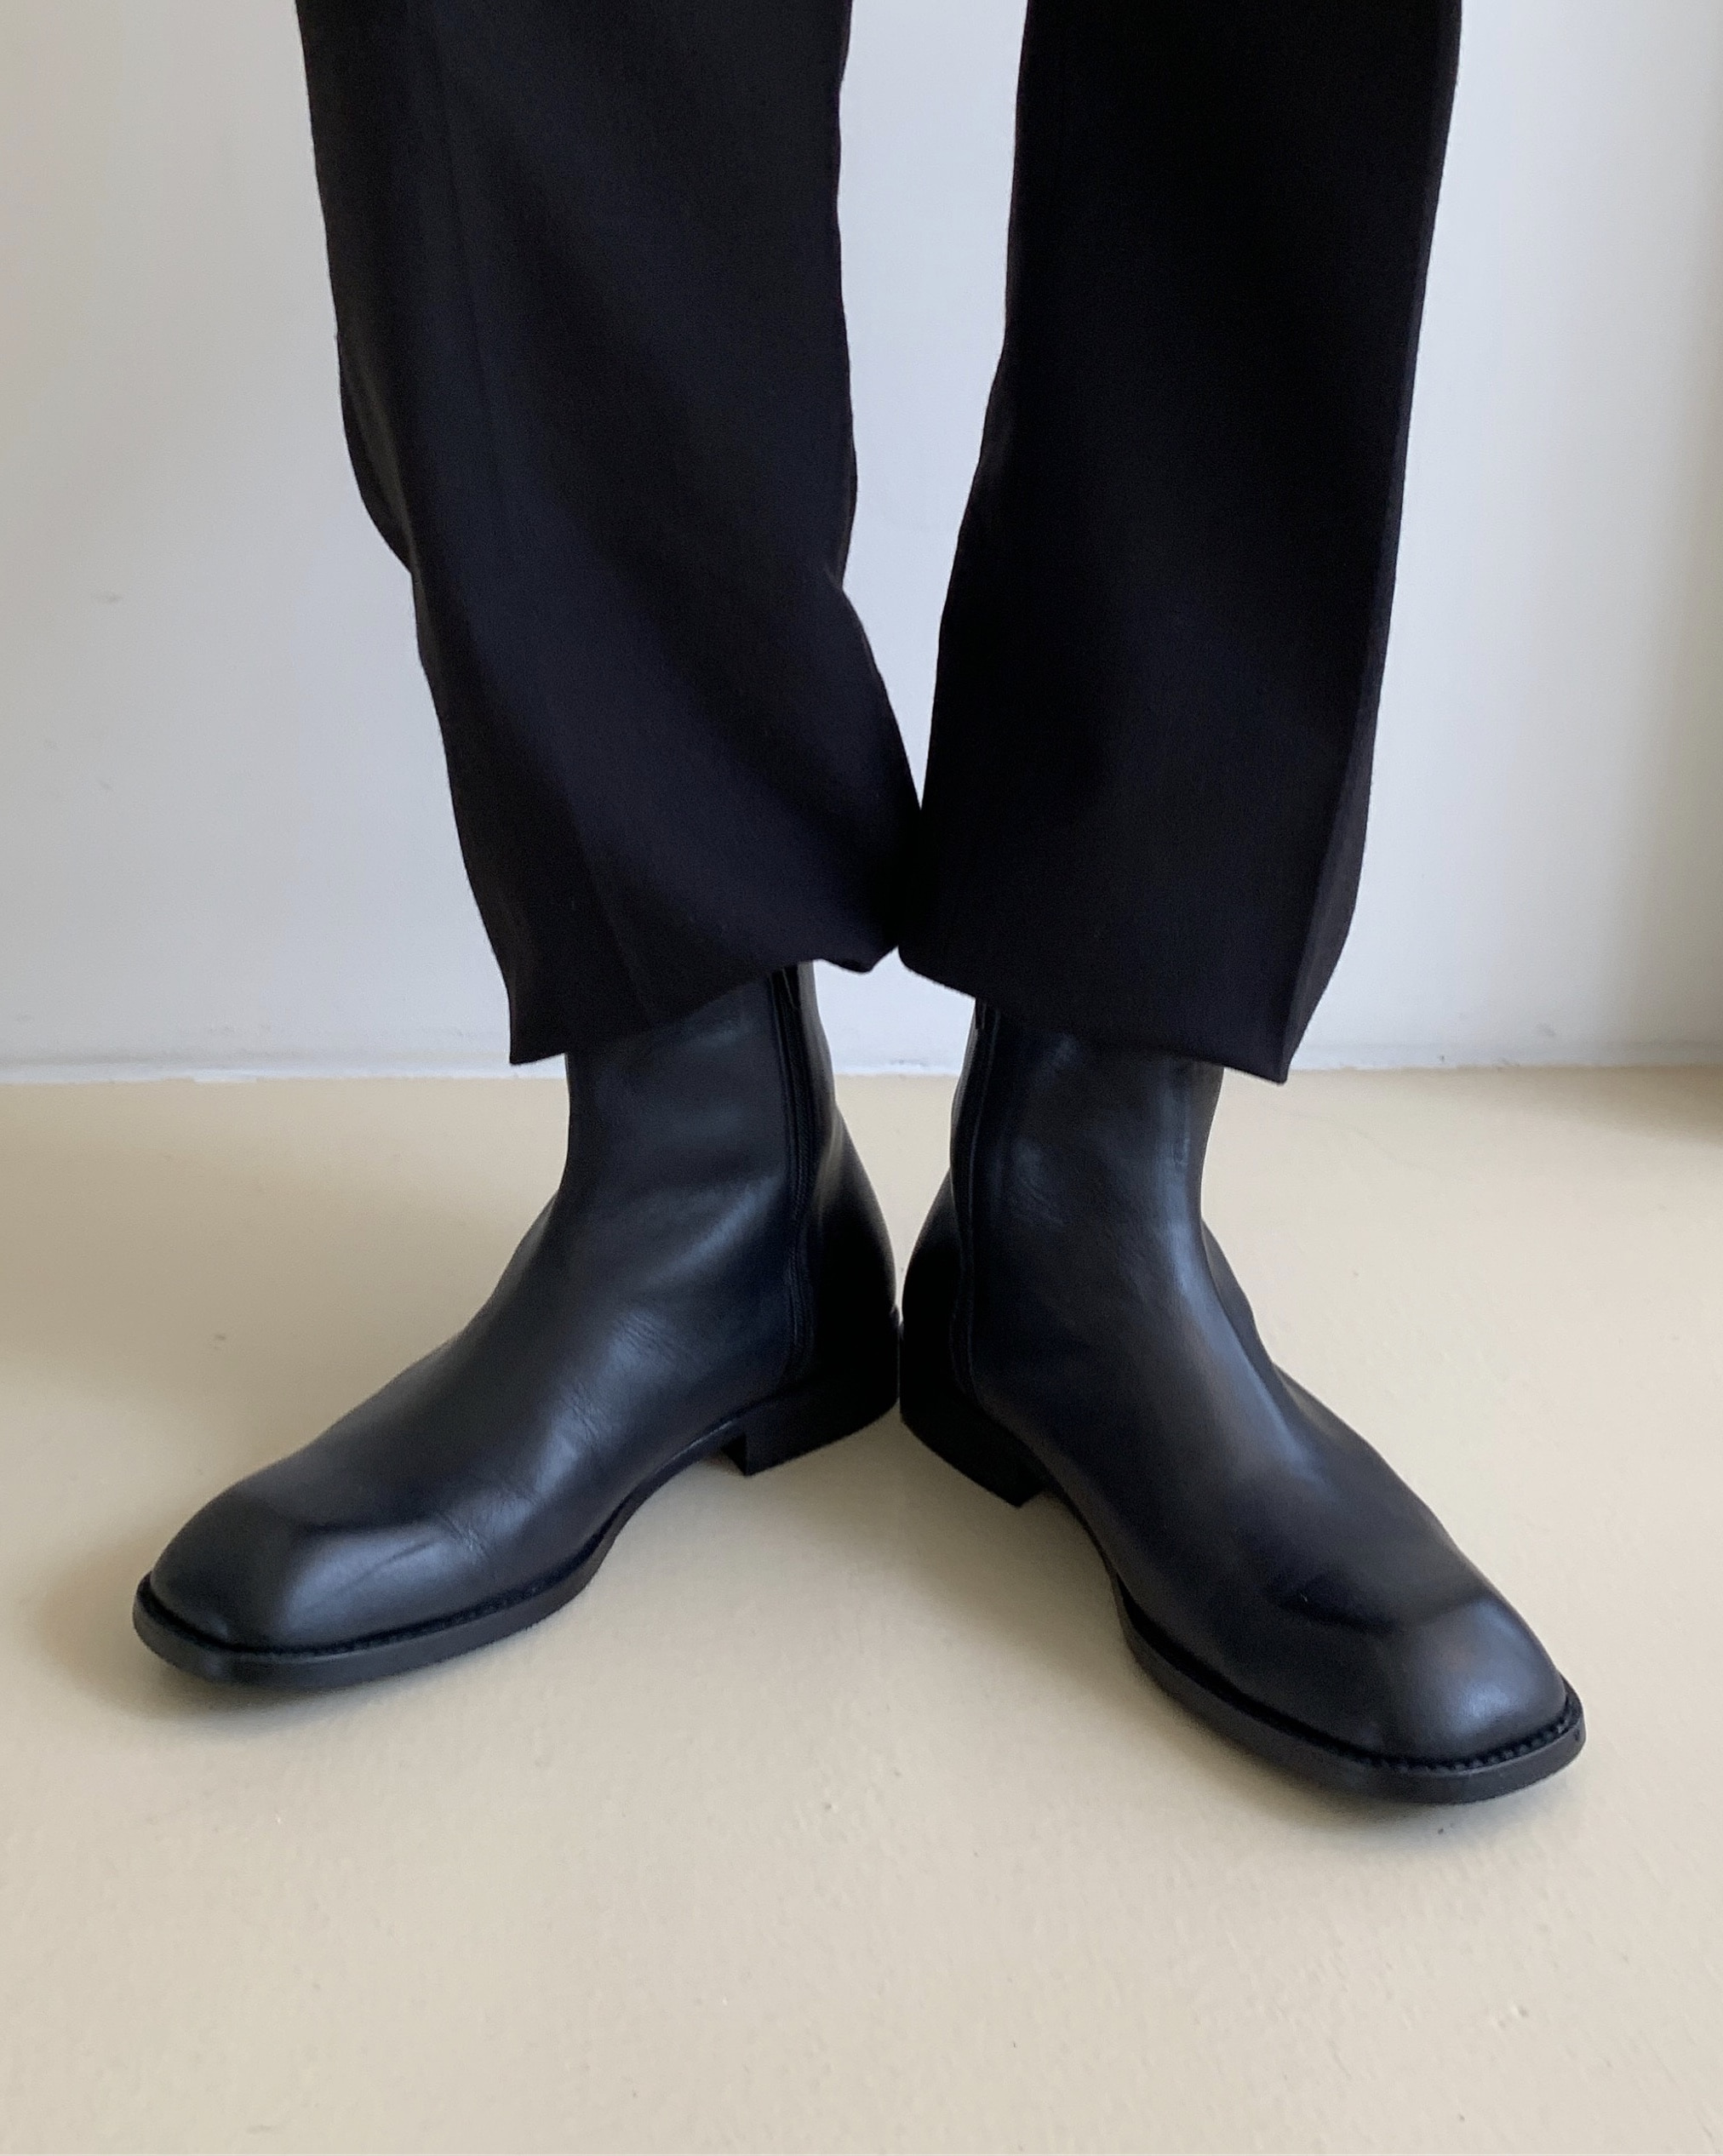 Flat square toe chelsea boots